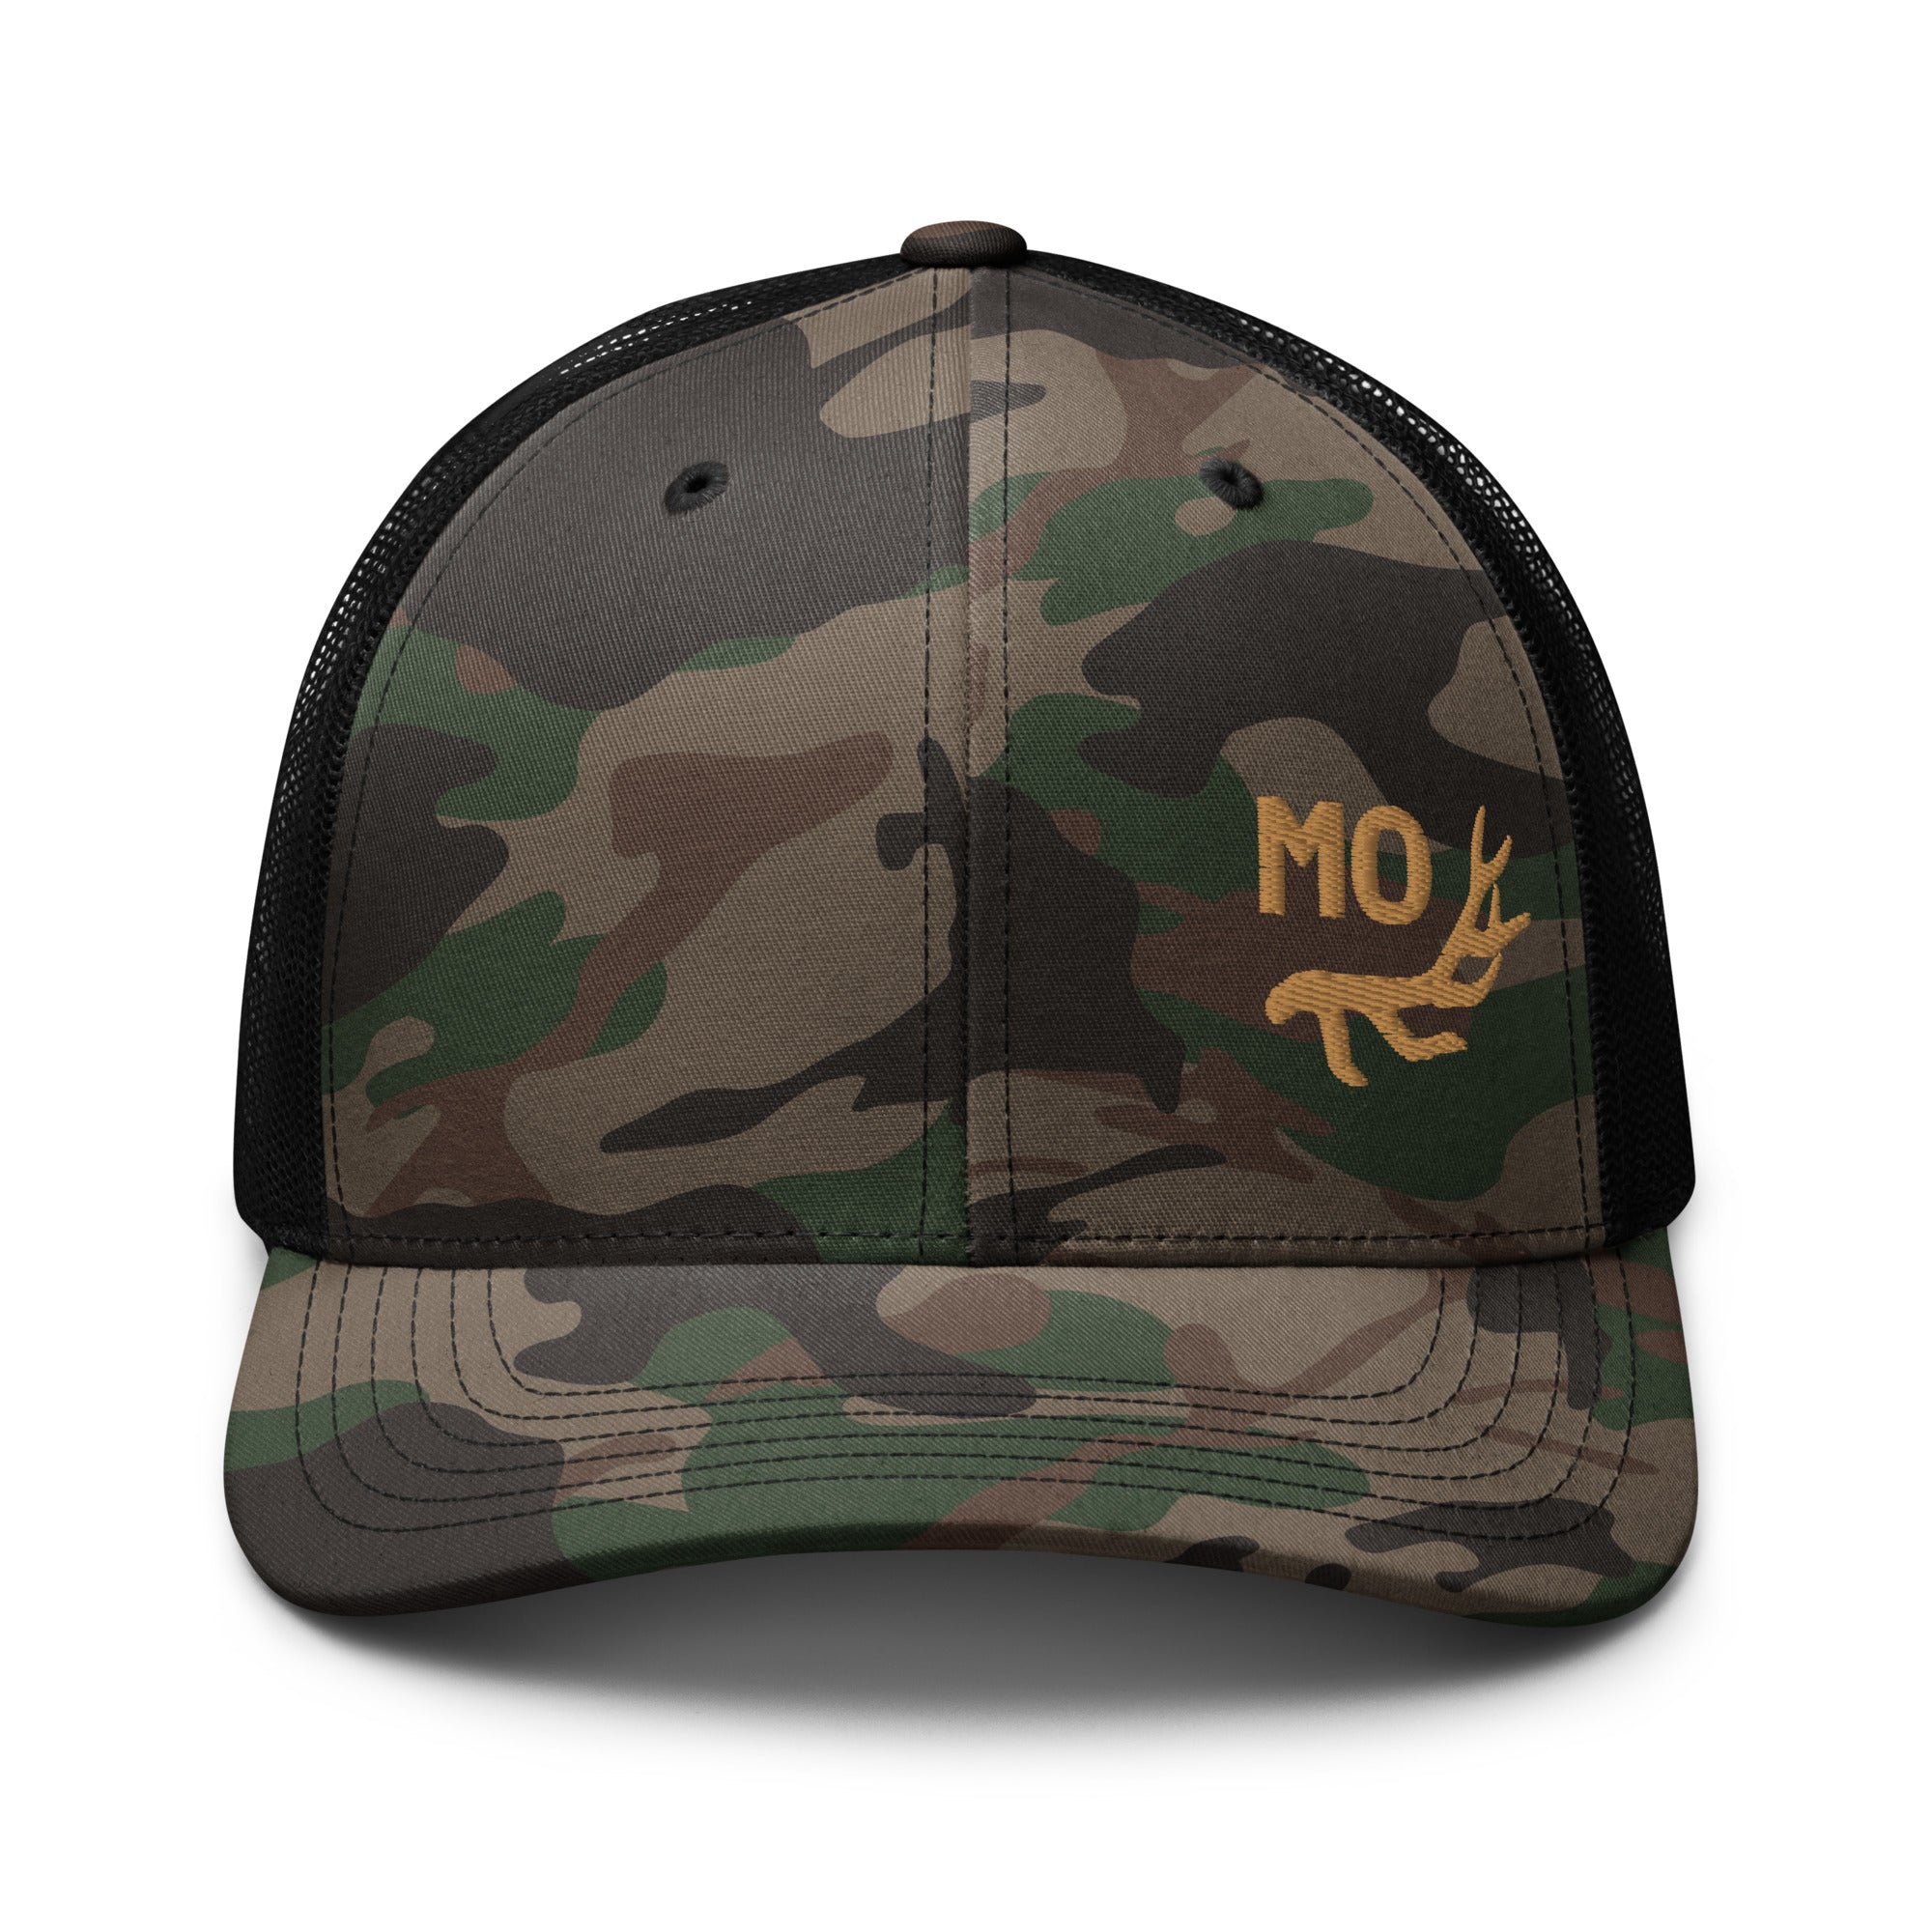 camouflage-trucker-hat-camo-black-front-655e61d9ddd51.jpg